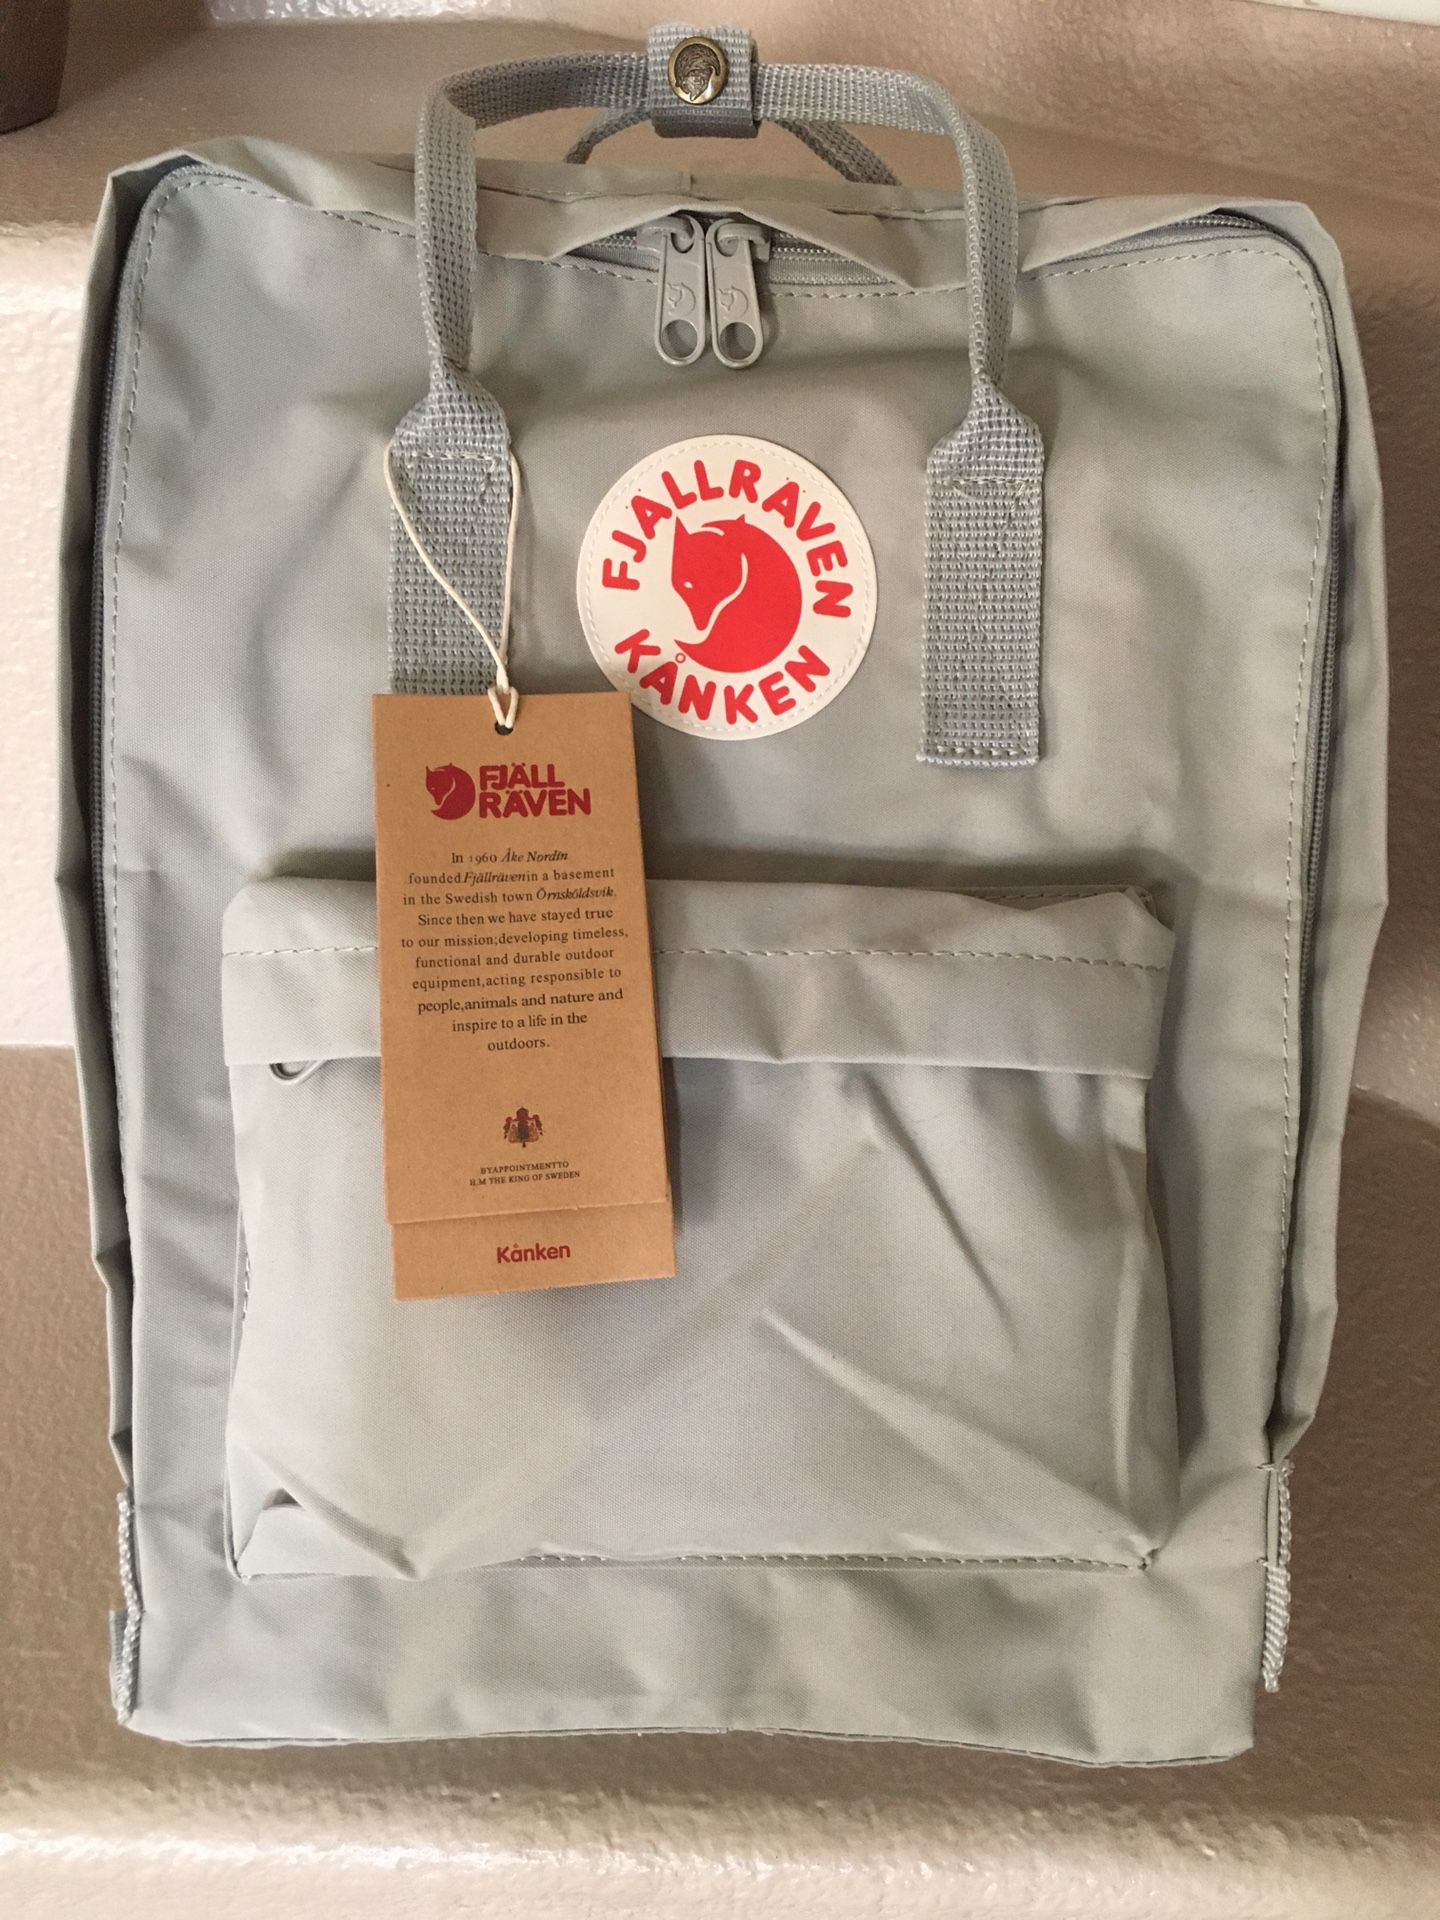 Classic Fjallraven backpack